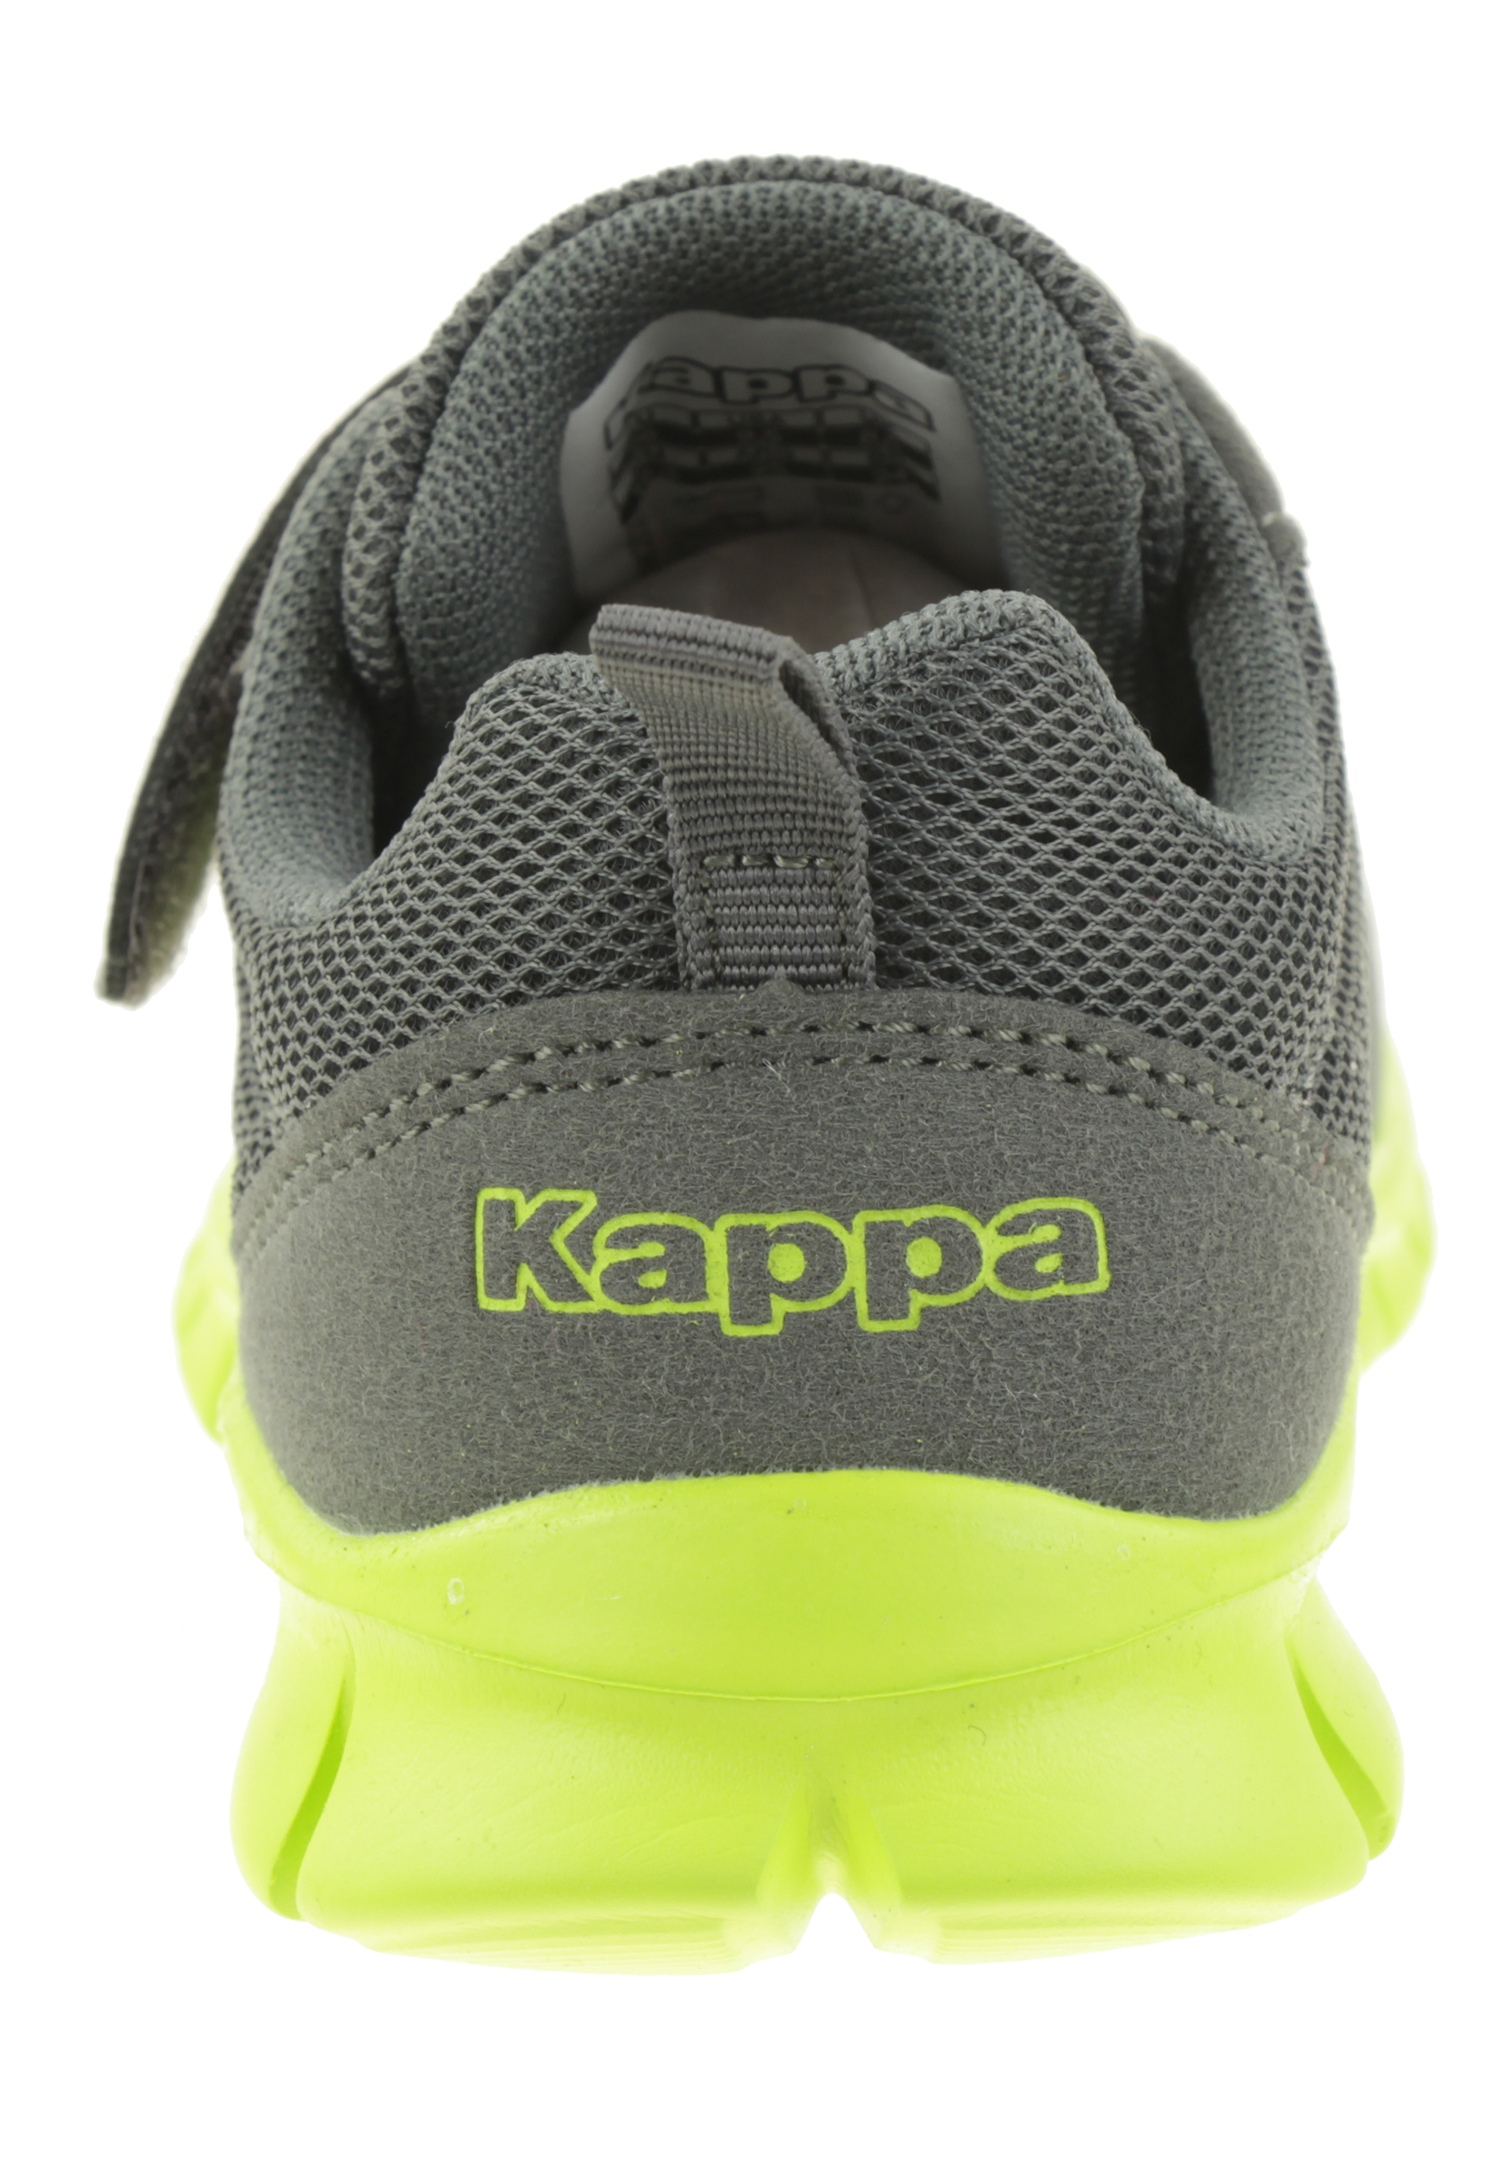 Kappa Unisex Kinder Sneaker Turnschuh 260982BCK 1633 Grey/Lime